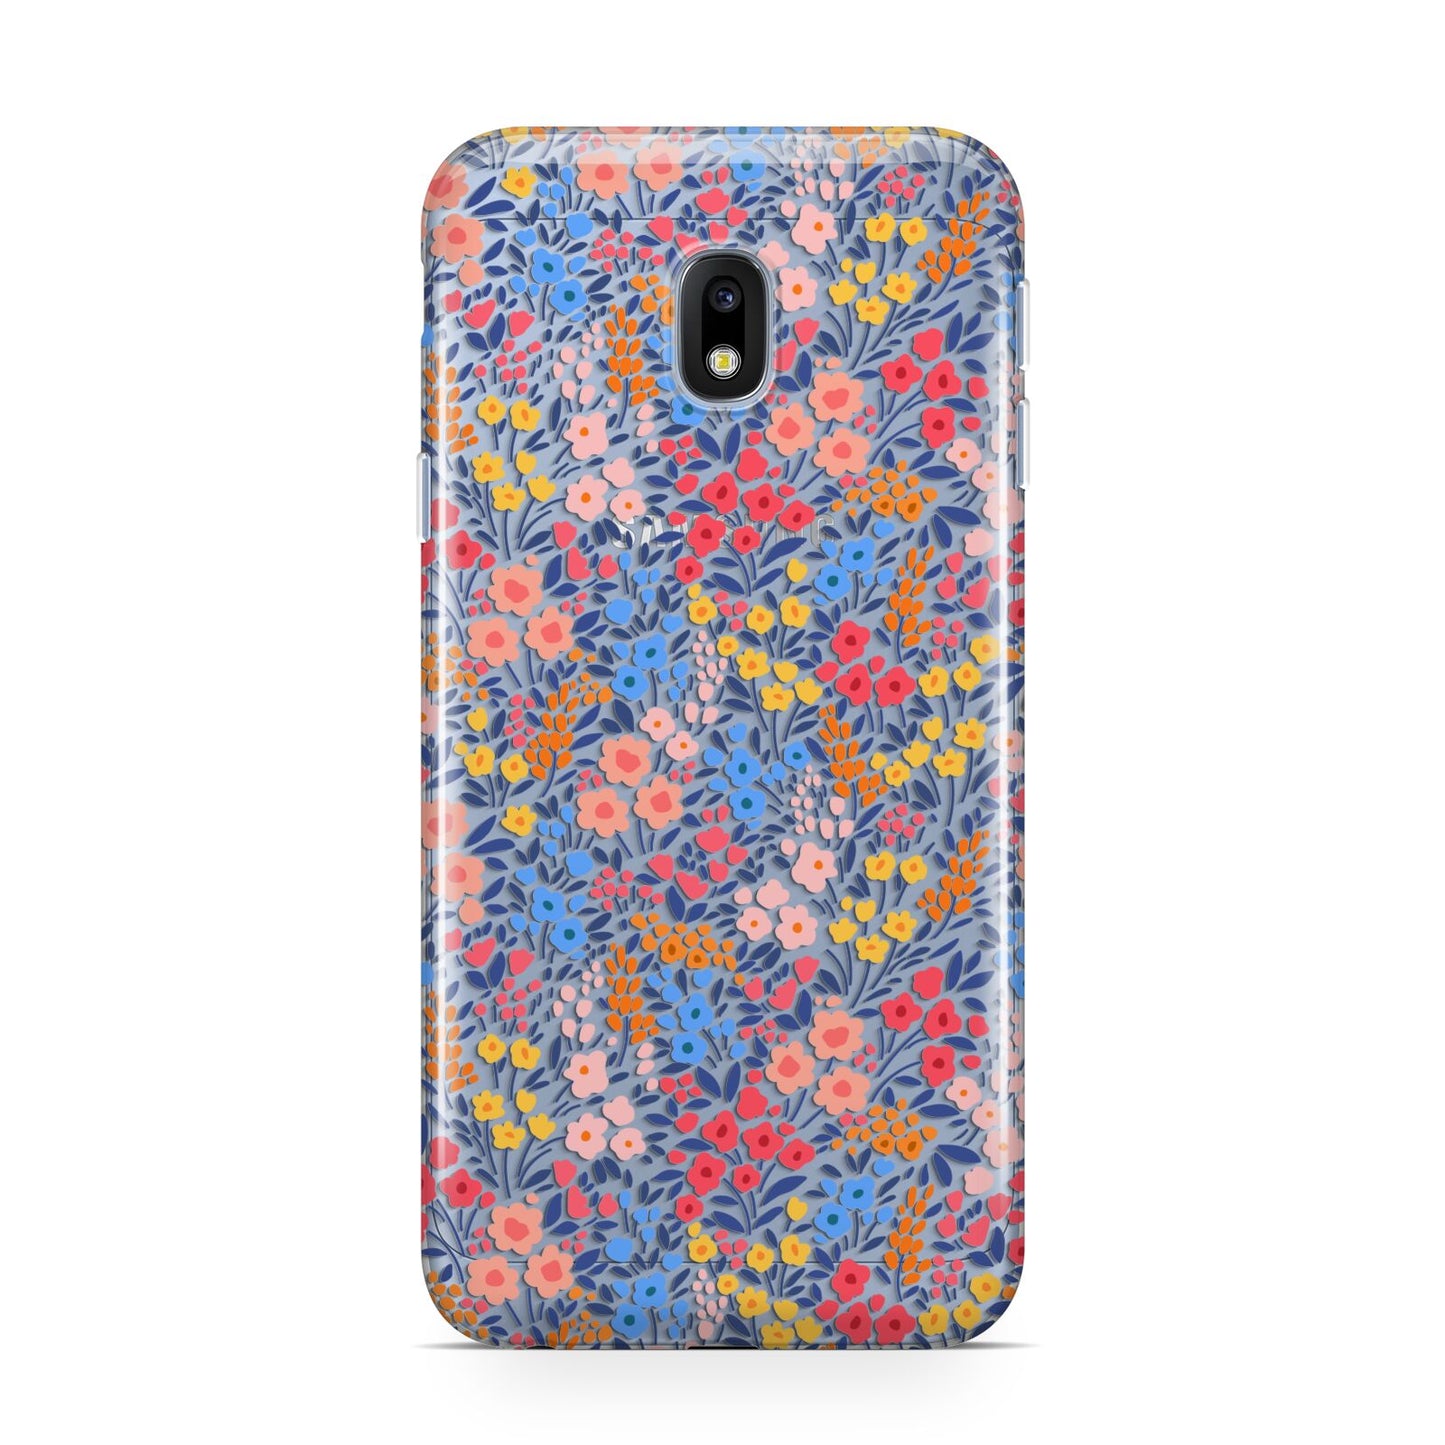 Small Flowers Samsung Galaxy J3 2017 Case